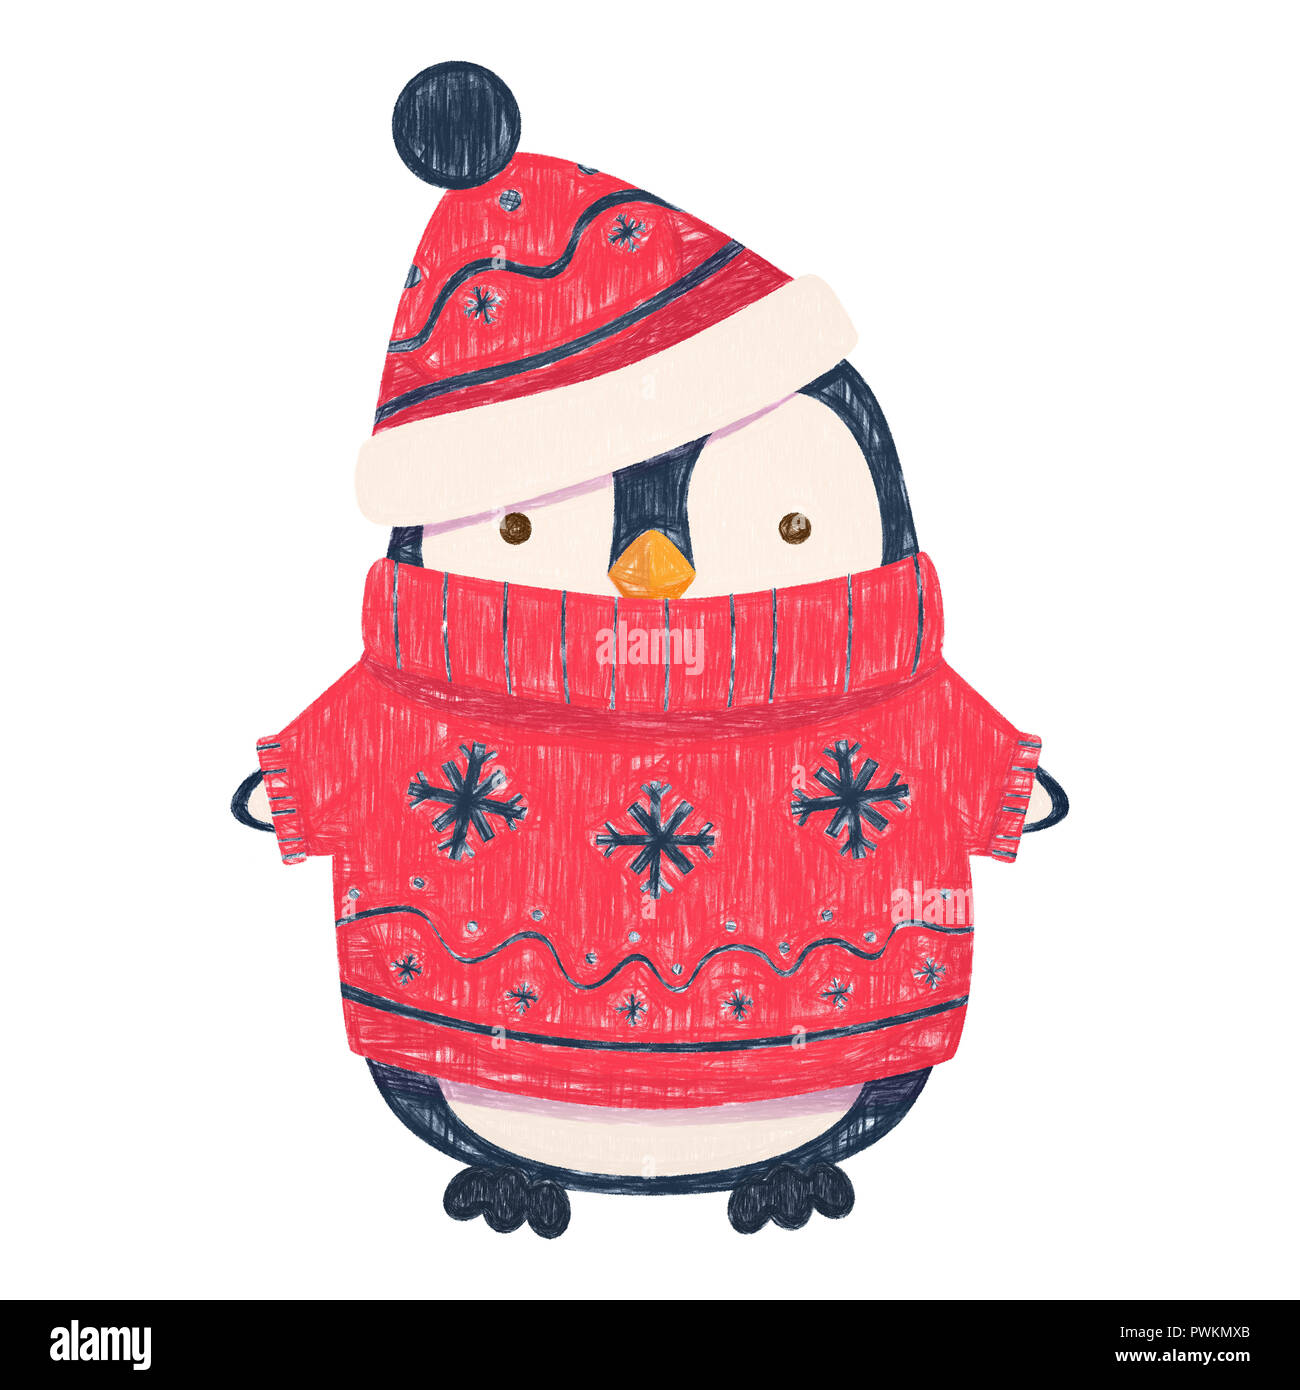 Cute penguin with a sweater Art Print by Carmen de Bruijn